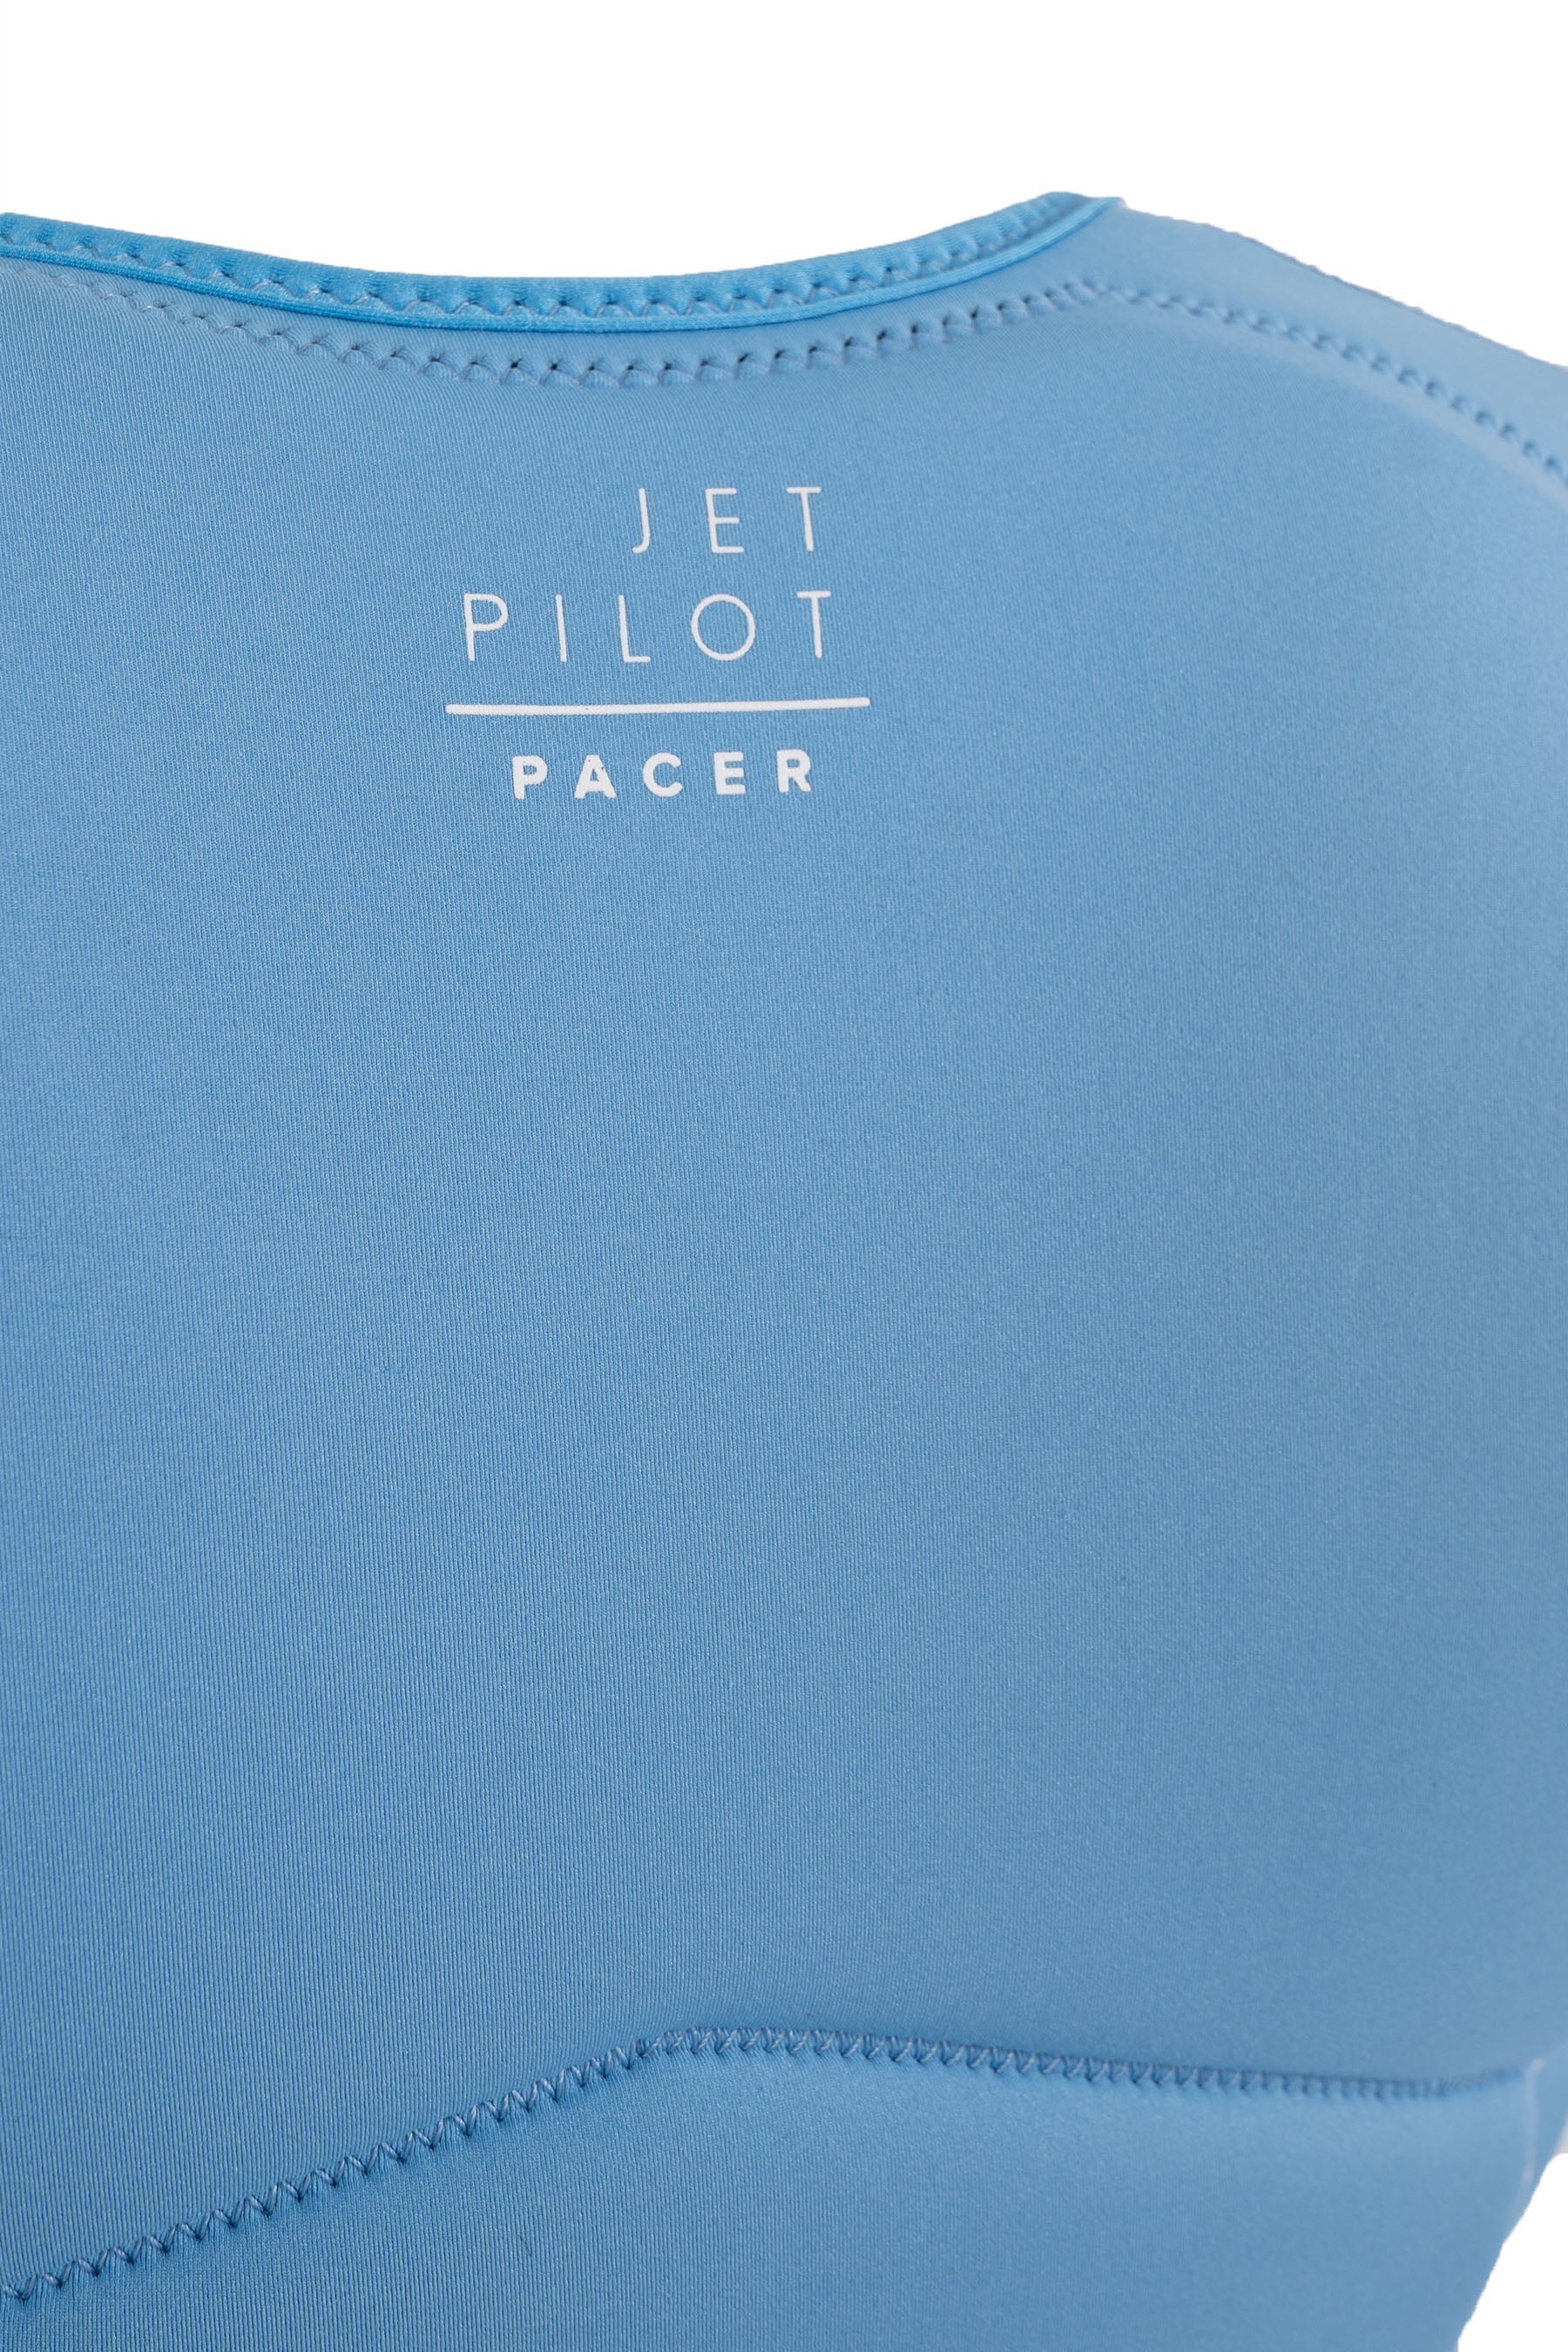 Jetpilot Pacer Ladies Life Jacket - Blue